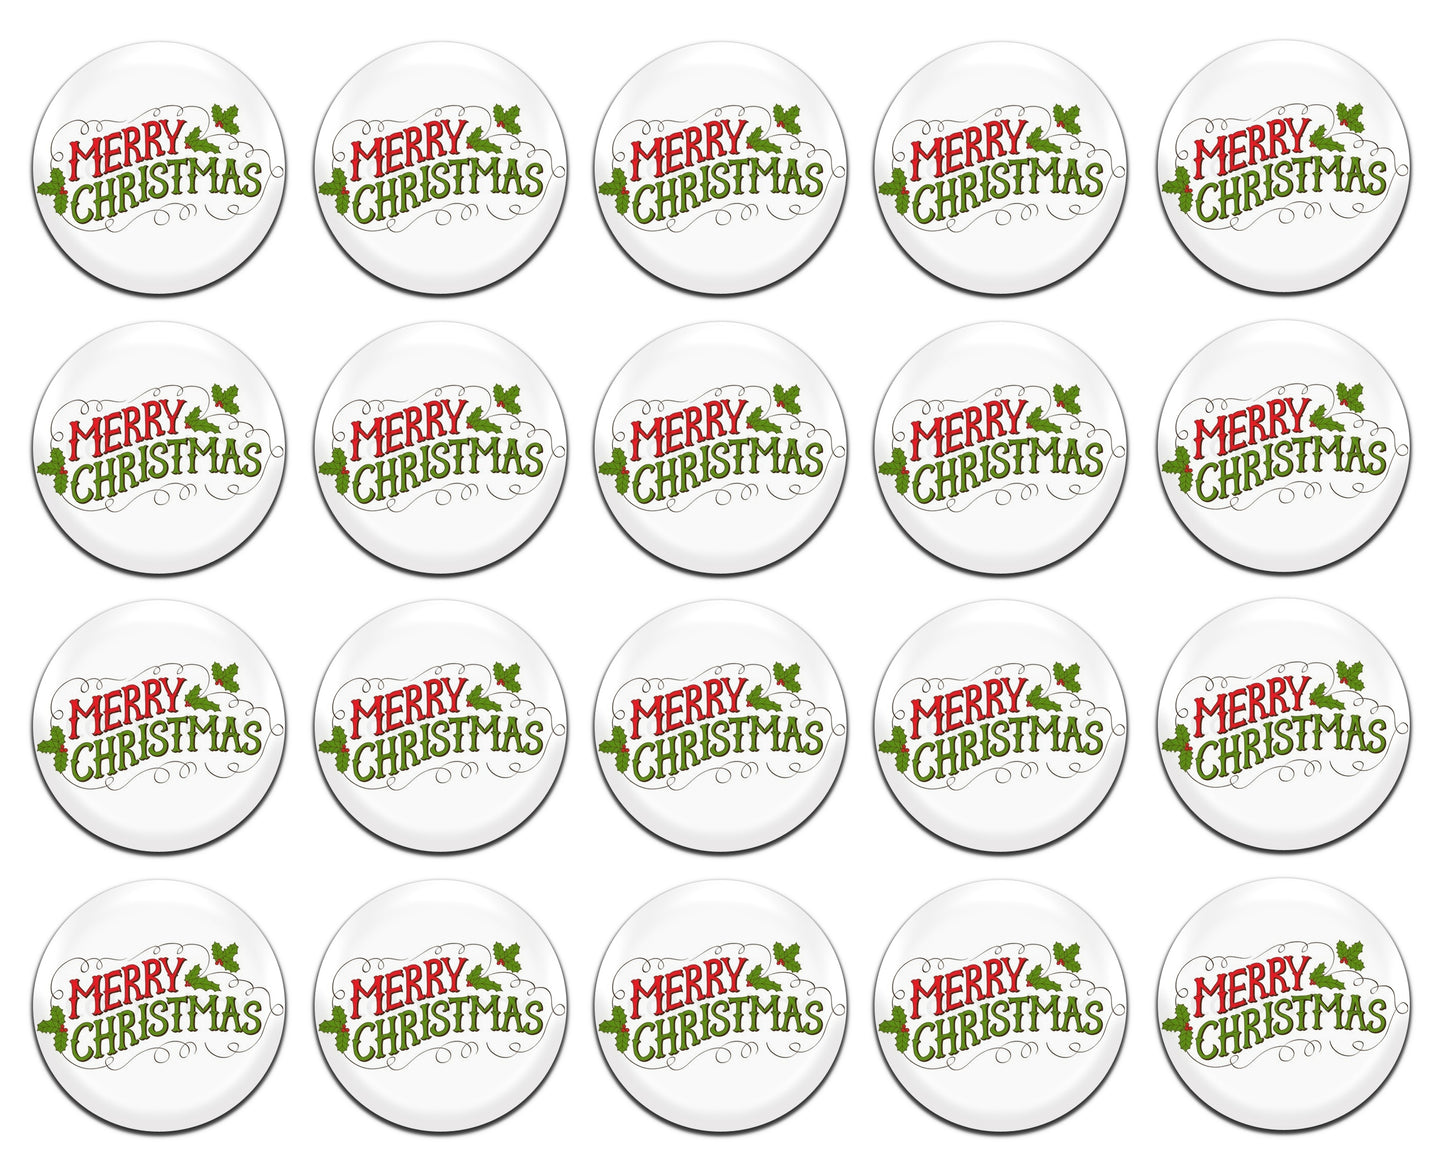 Merry Christmas Xmas Festive 25mm / 1 Inch D-Pin Button Badges (20x Set)